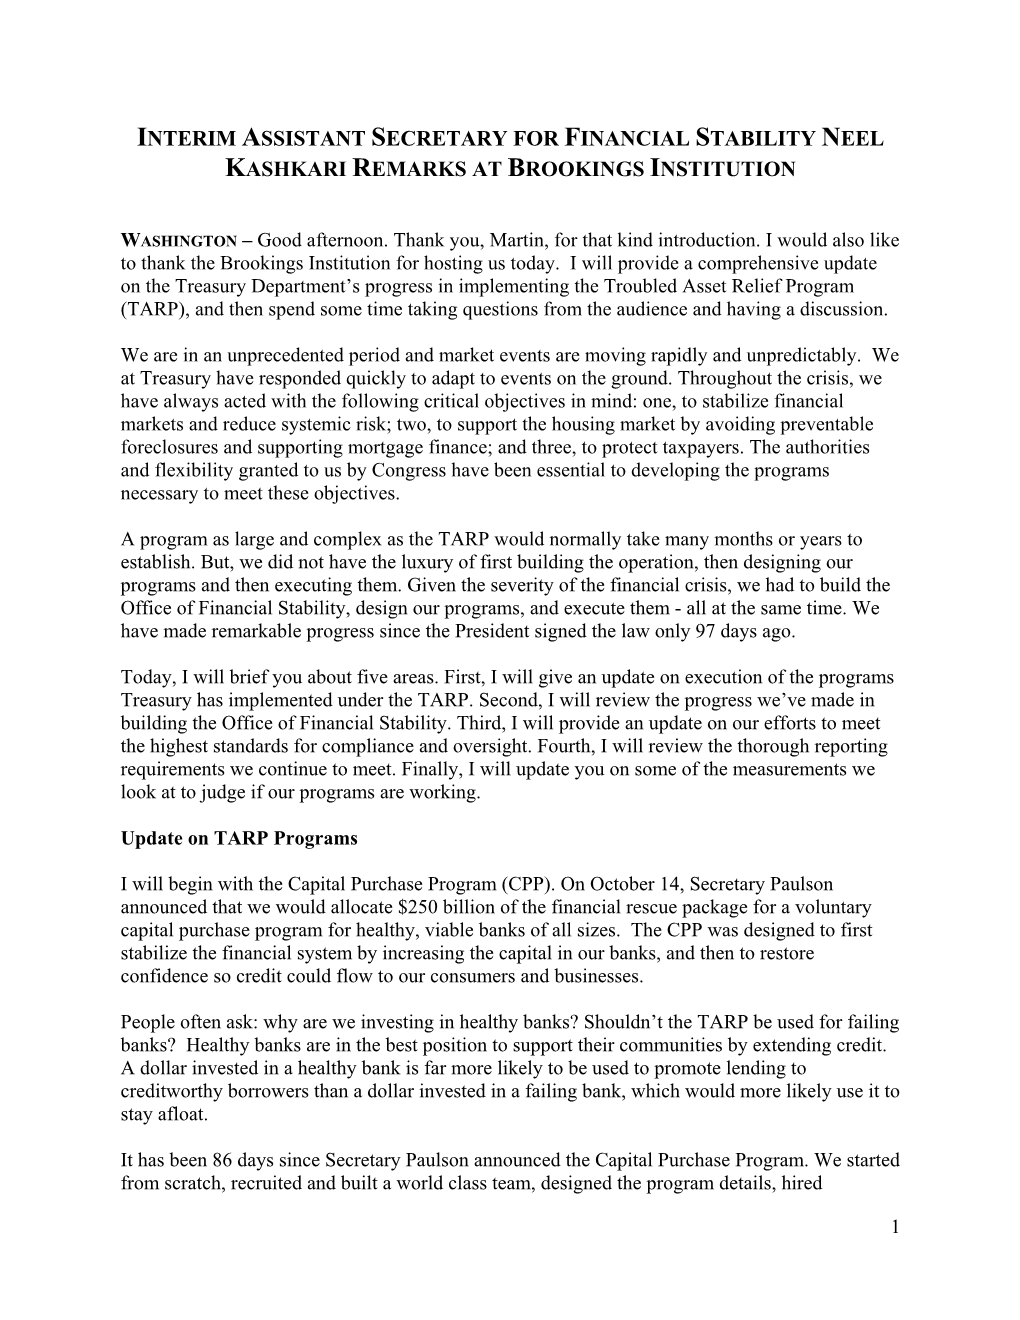 Interim Assistant Secretary for Financial Stability Neel Kashkari Remarks at Brookings Institution